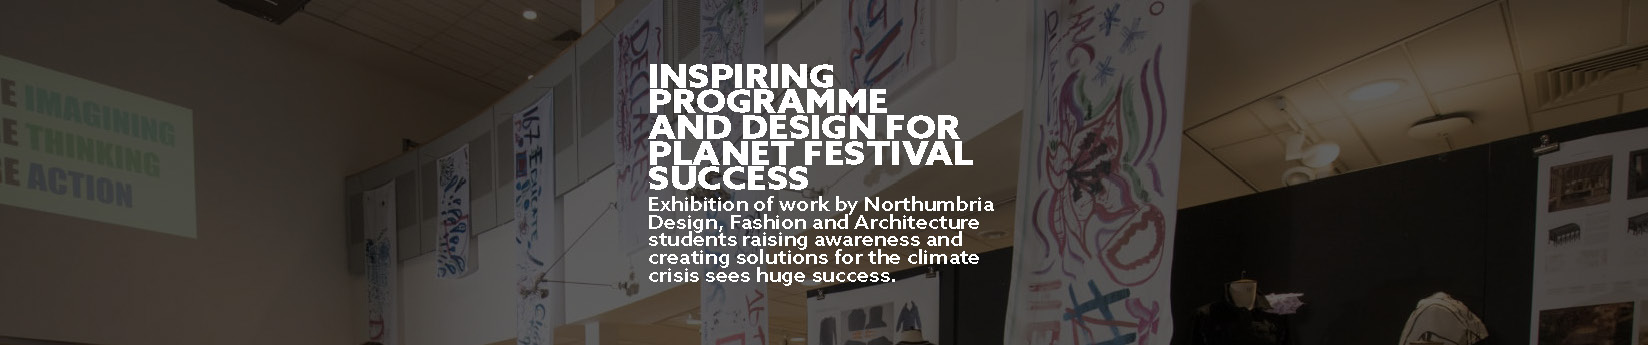 Inspiring programme and design for planet festival success